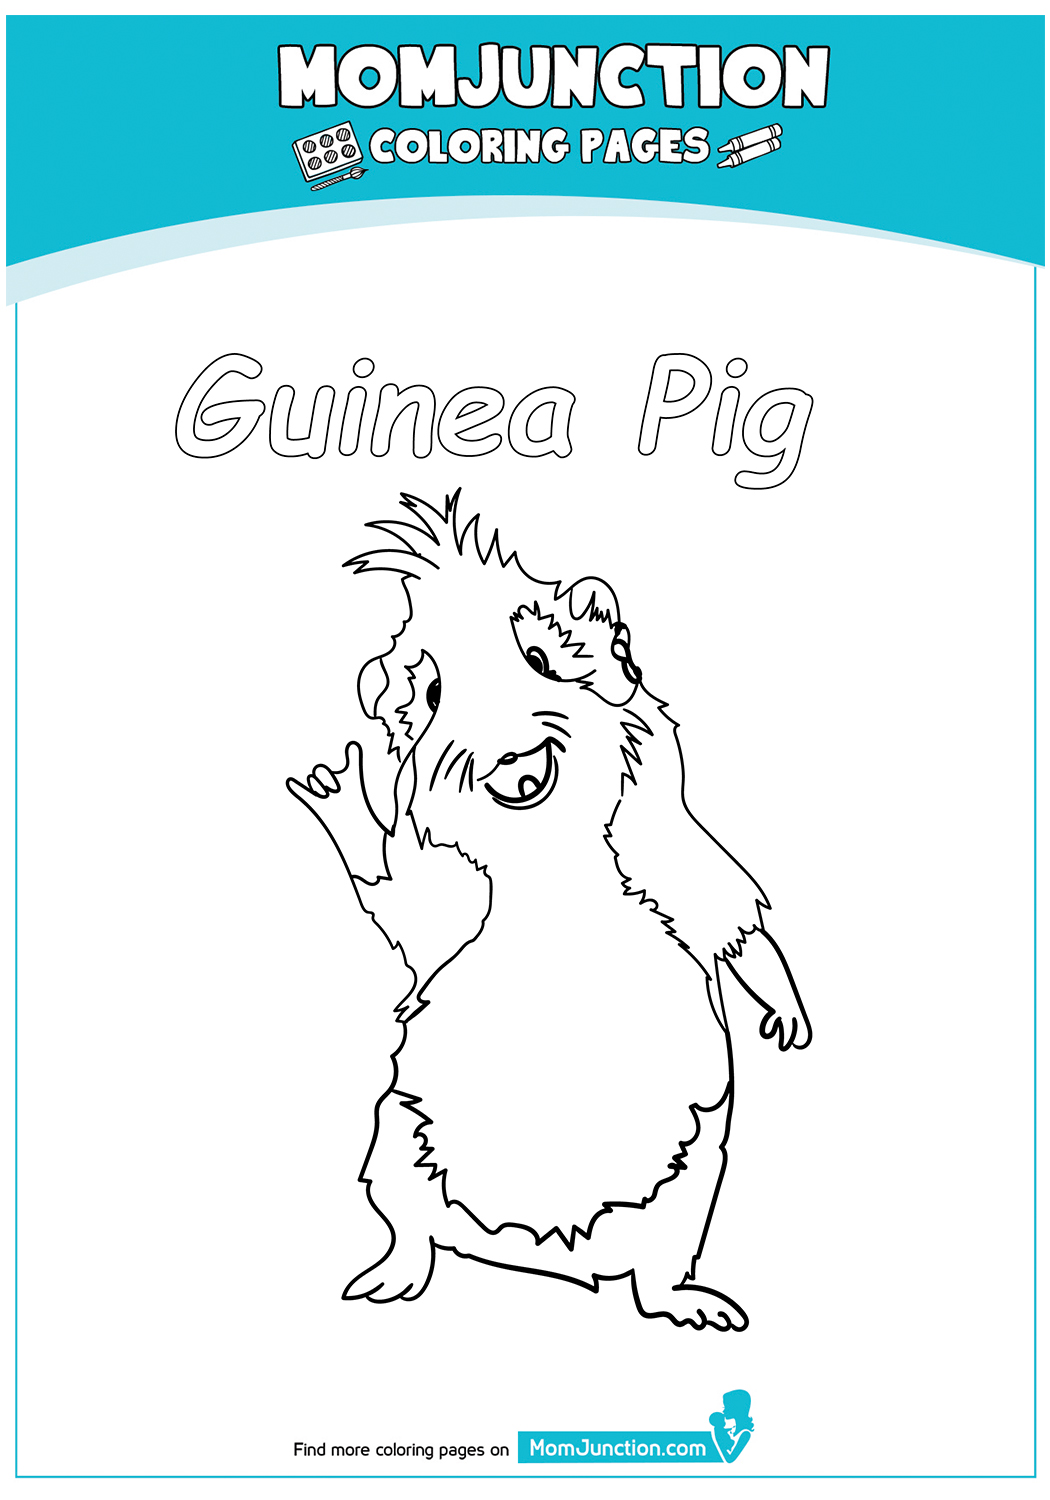 Guinea-Pig-hearing-17